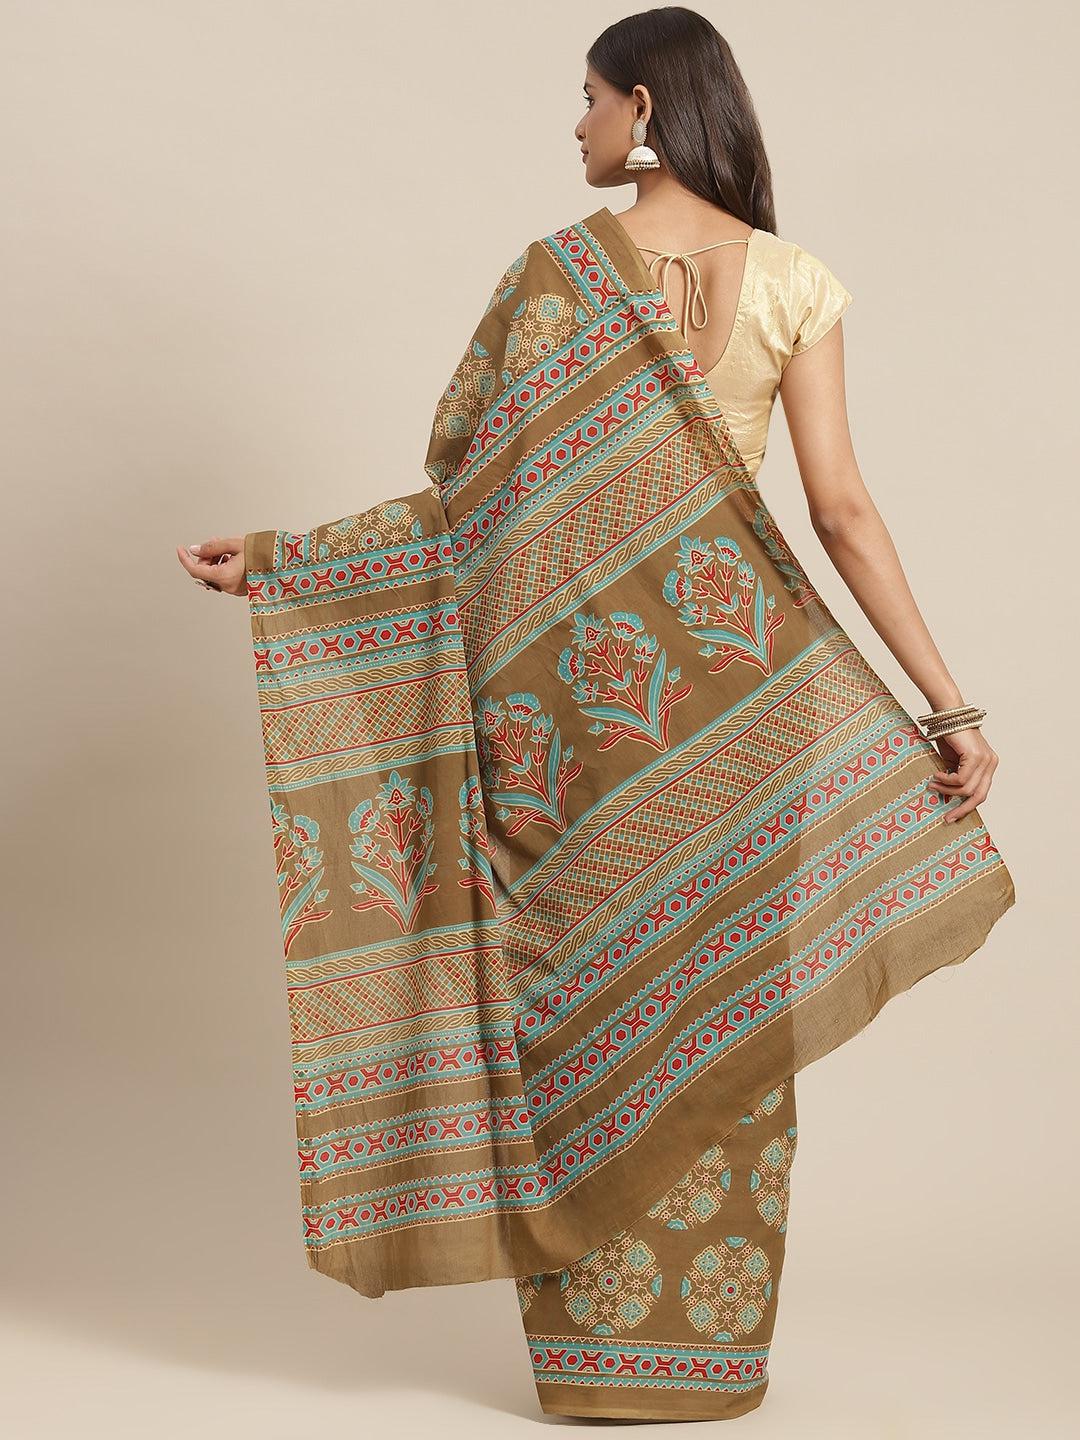 olive-printed-saree-10122061GR, Women Indian Ethnic Clothing, Cotton Saree